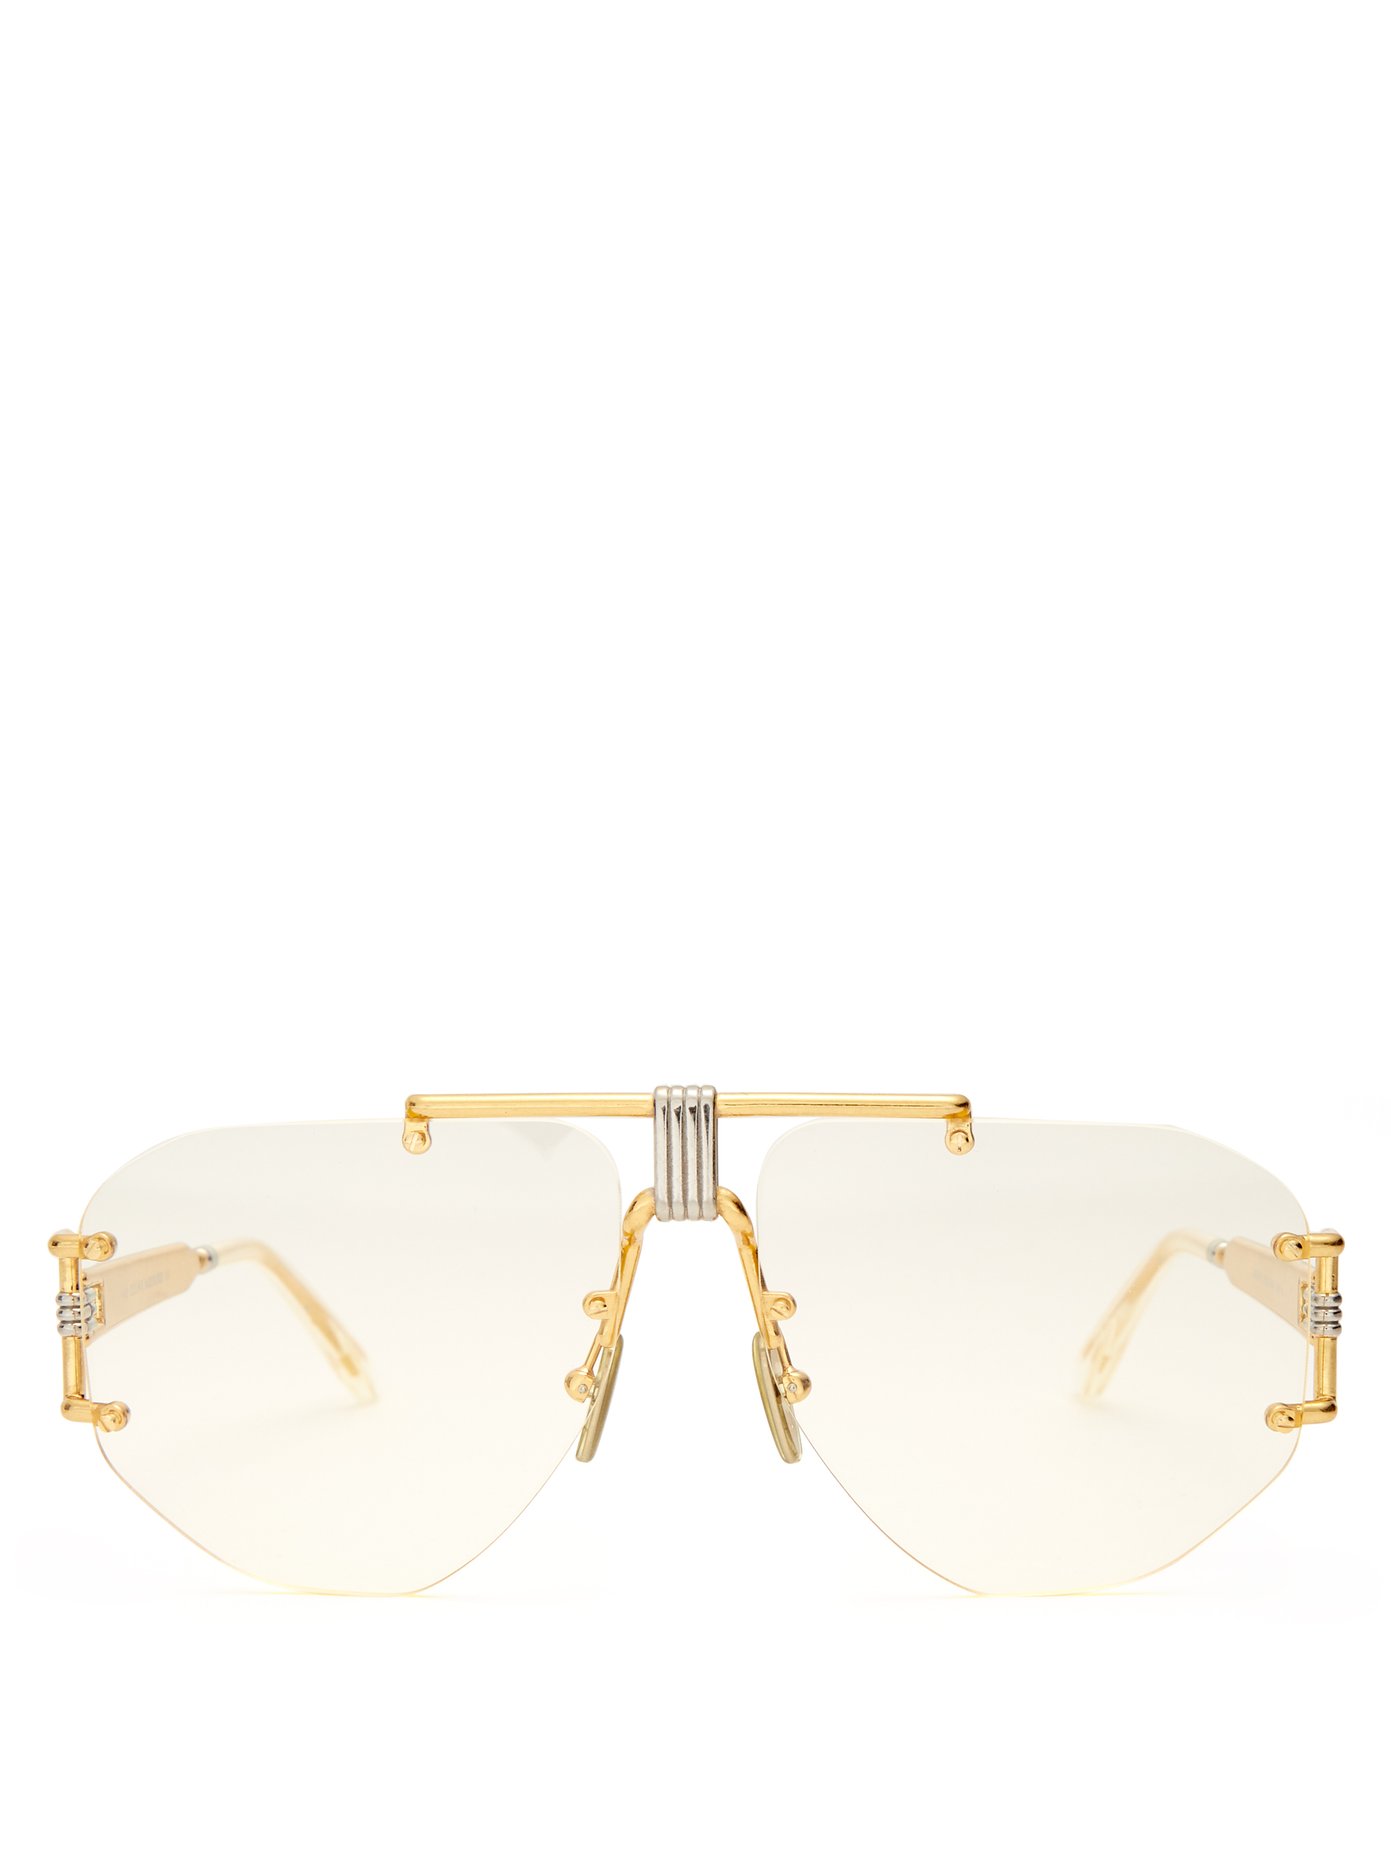 celine square aviator sunglasses